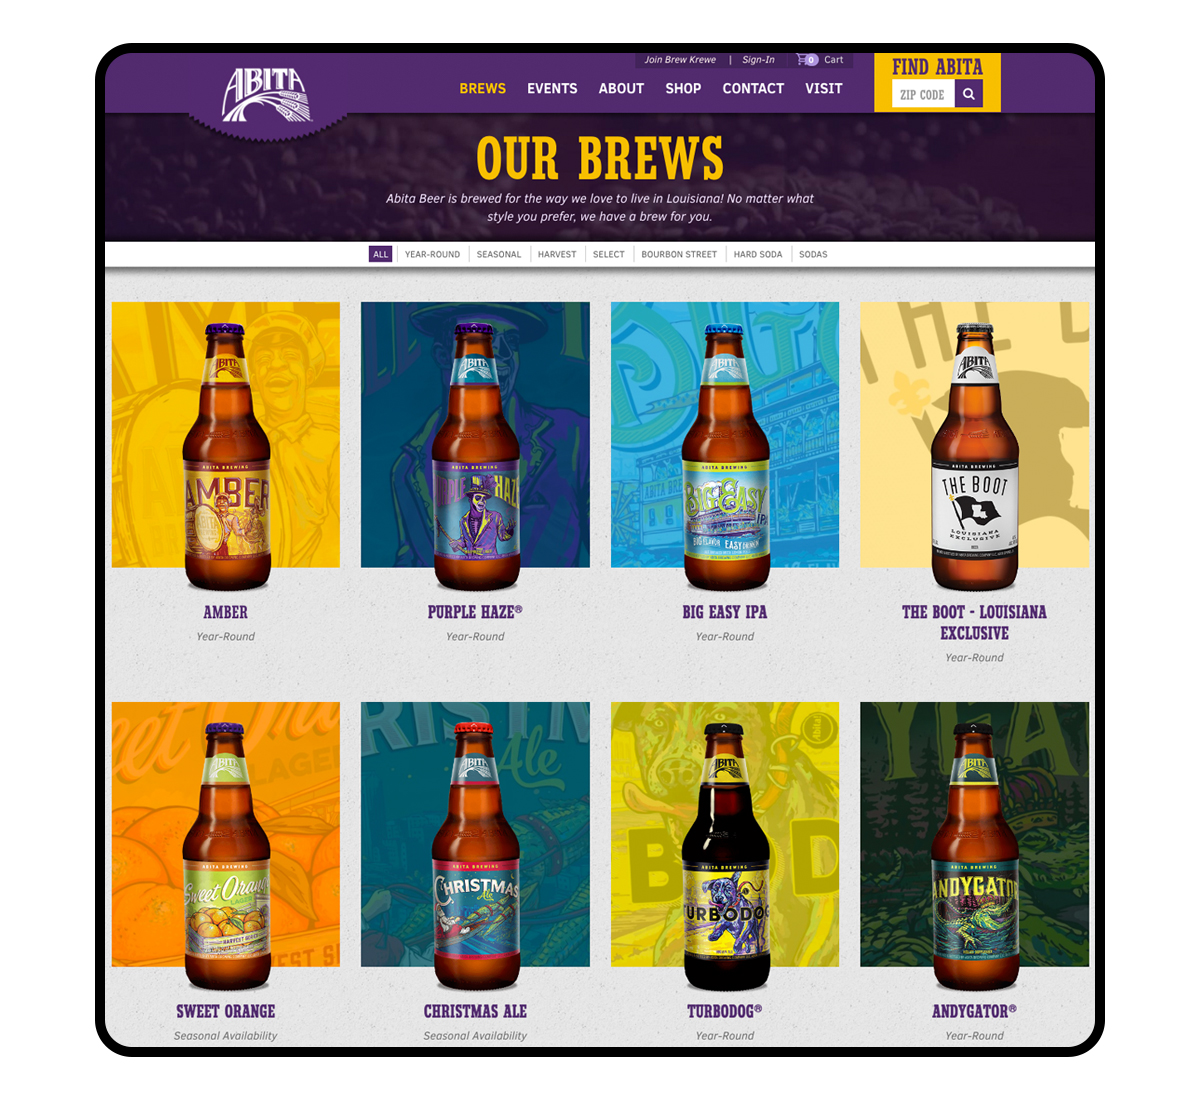 abita website screenshot with bottles in grid